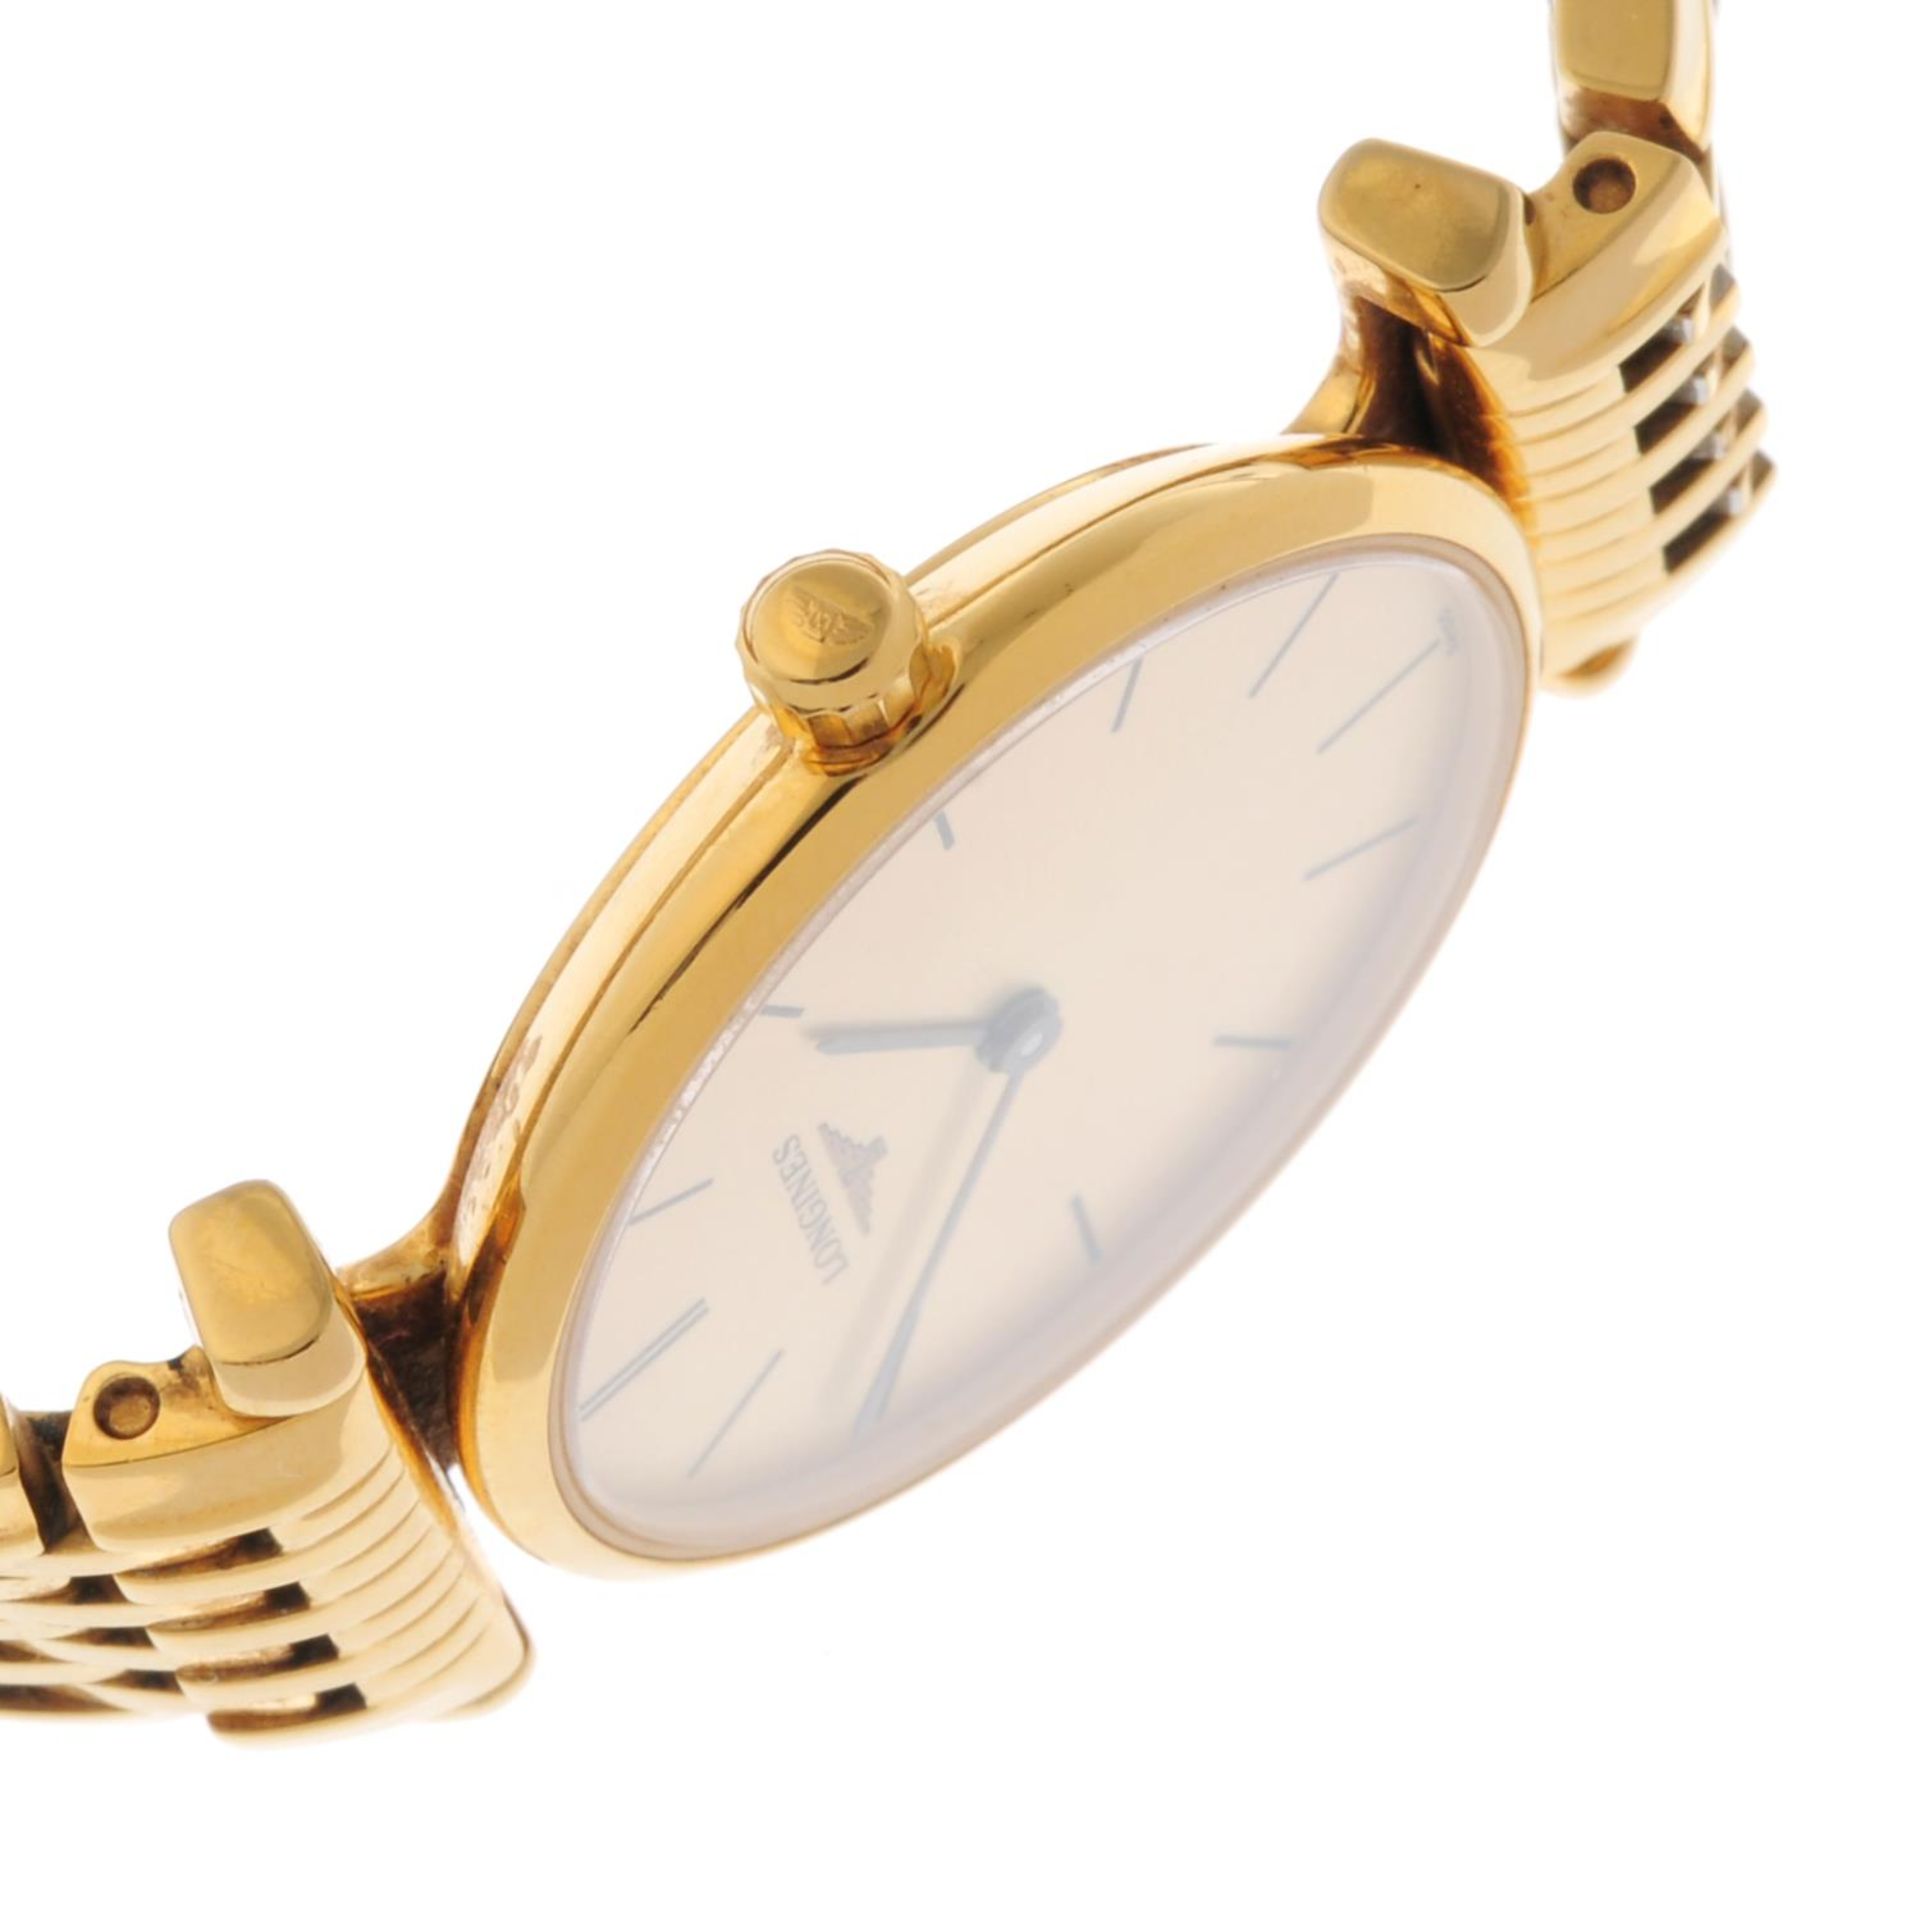 LONGINES - a La Grande Classique bracelet watch. - Image 3 of 4